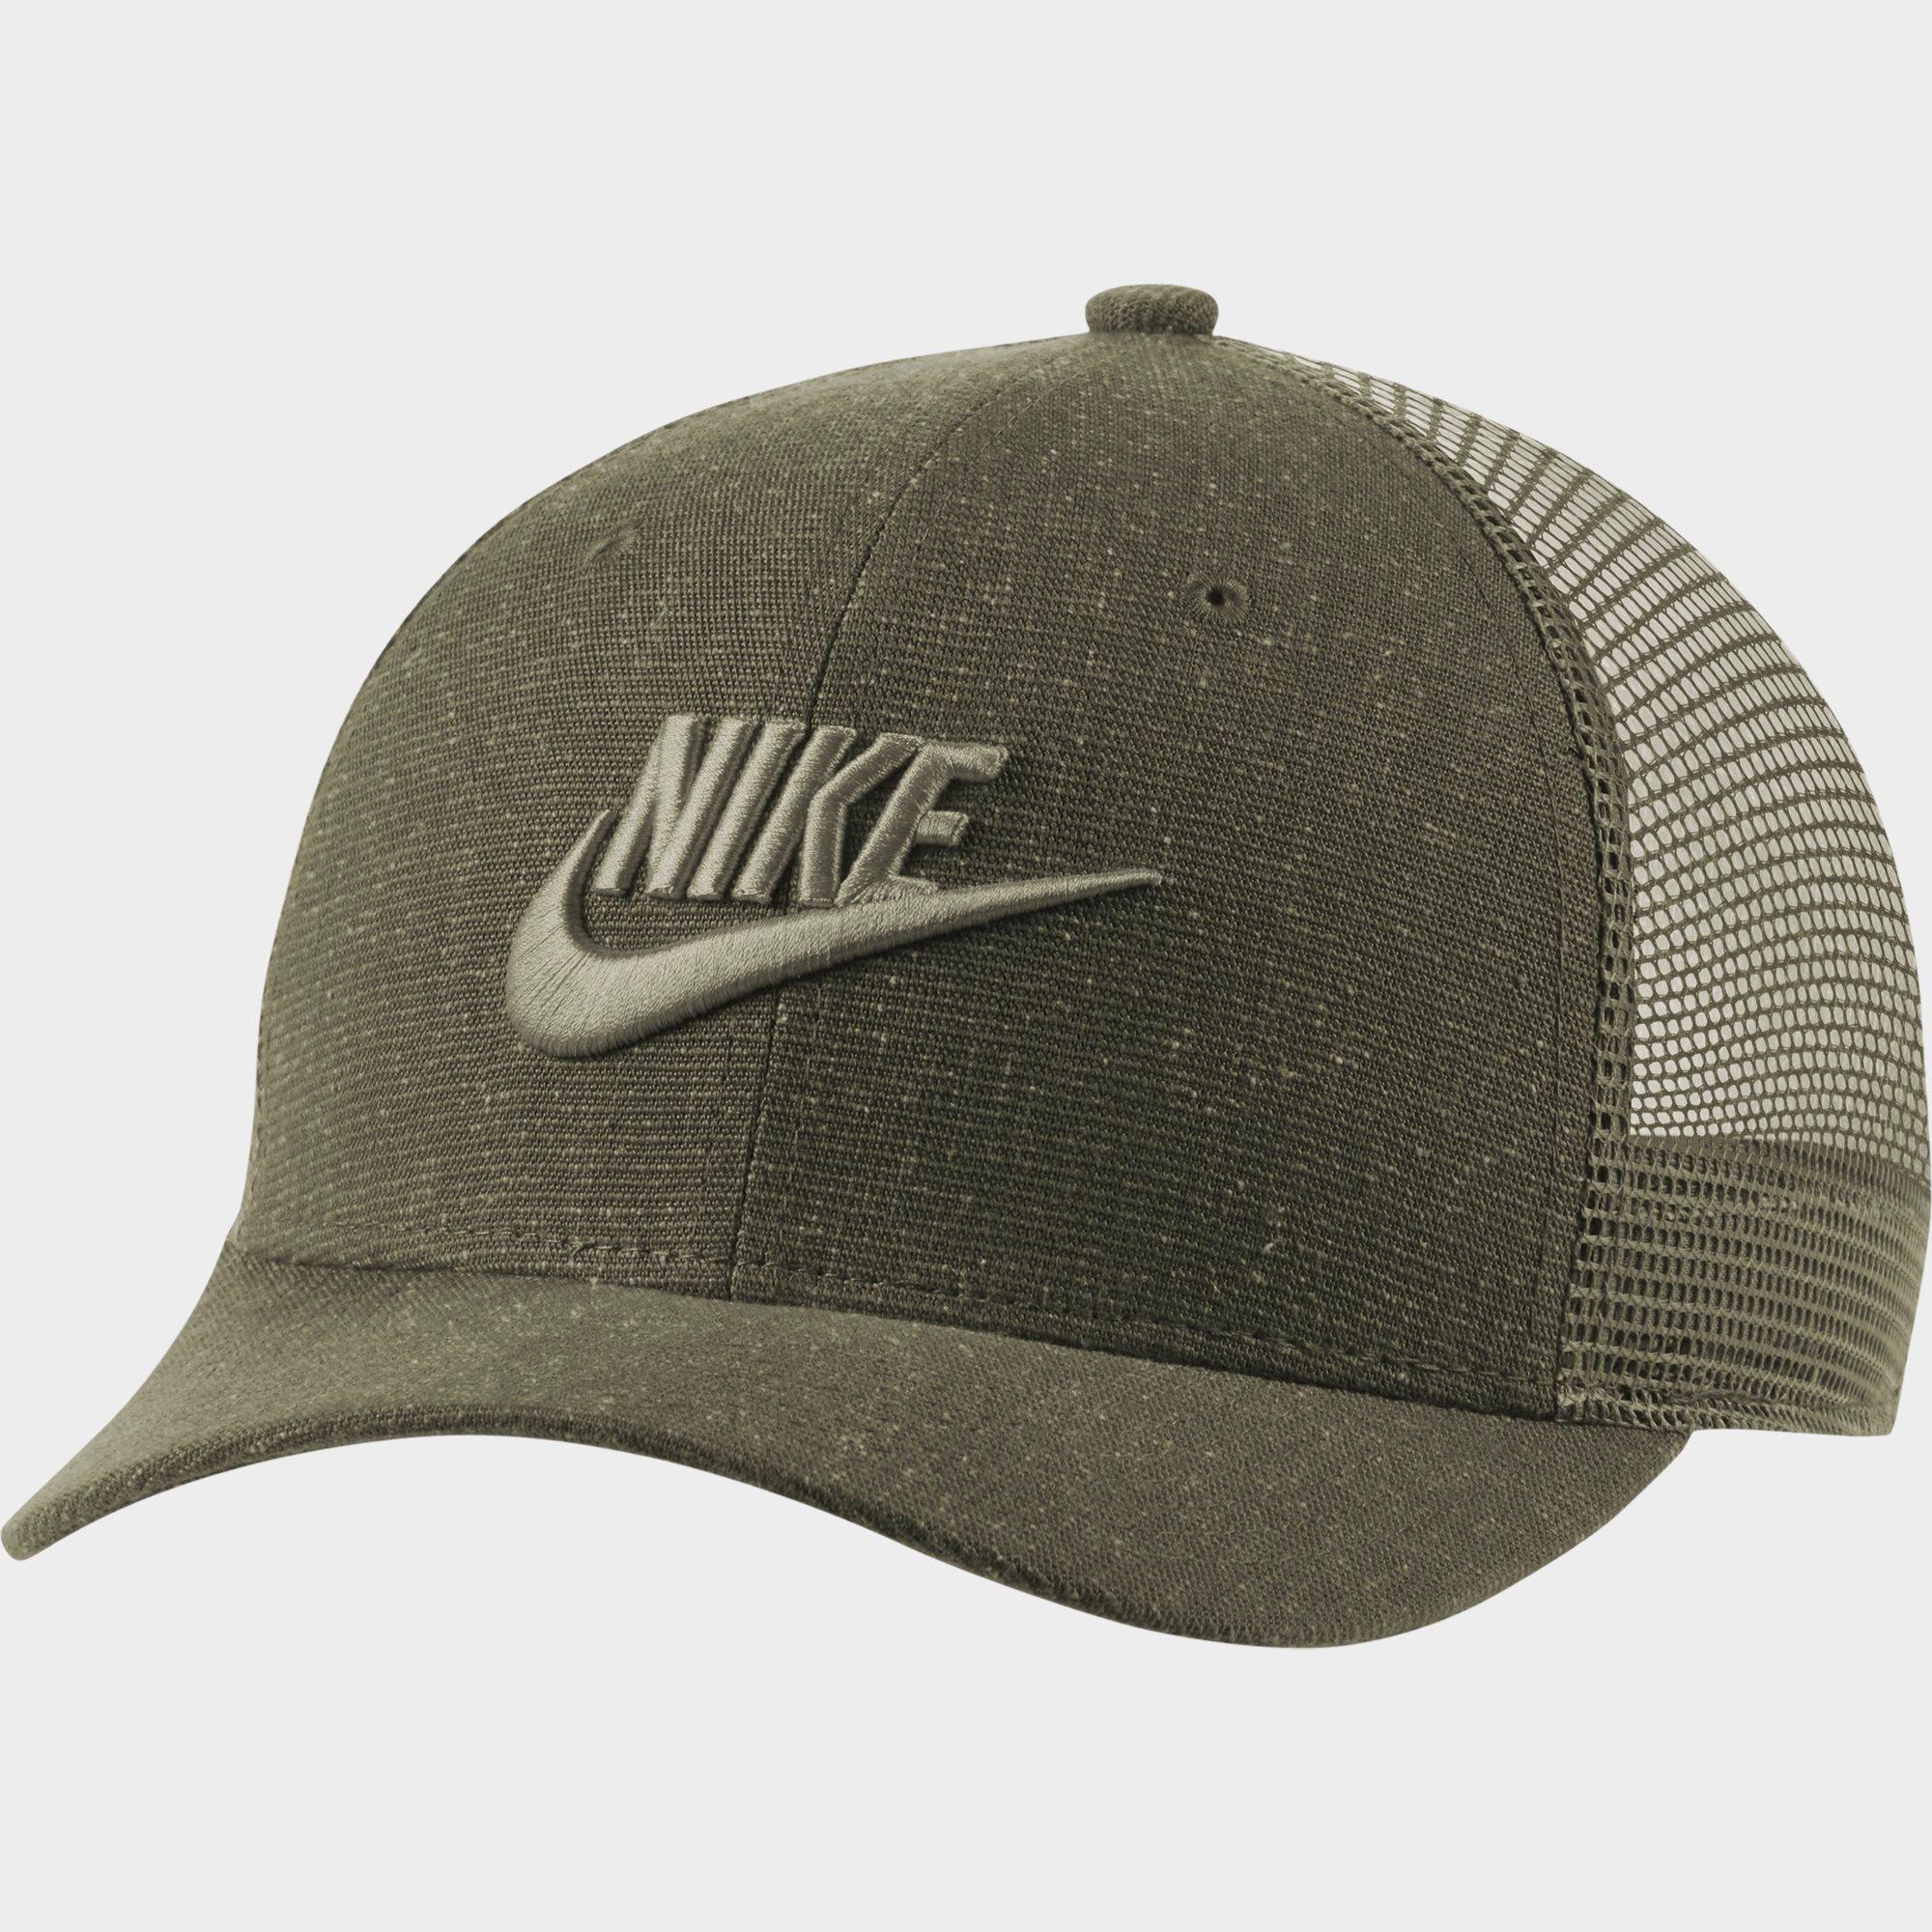 classic 99 trucker hat